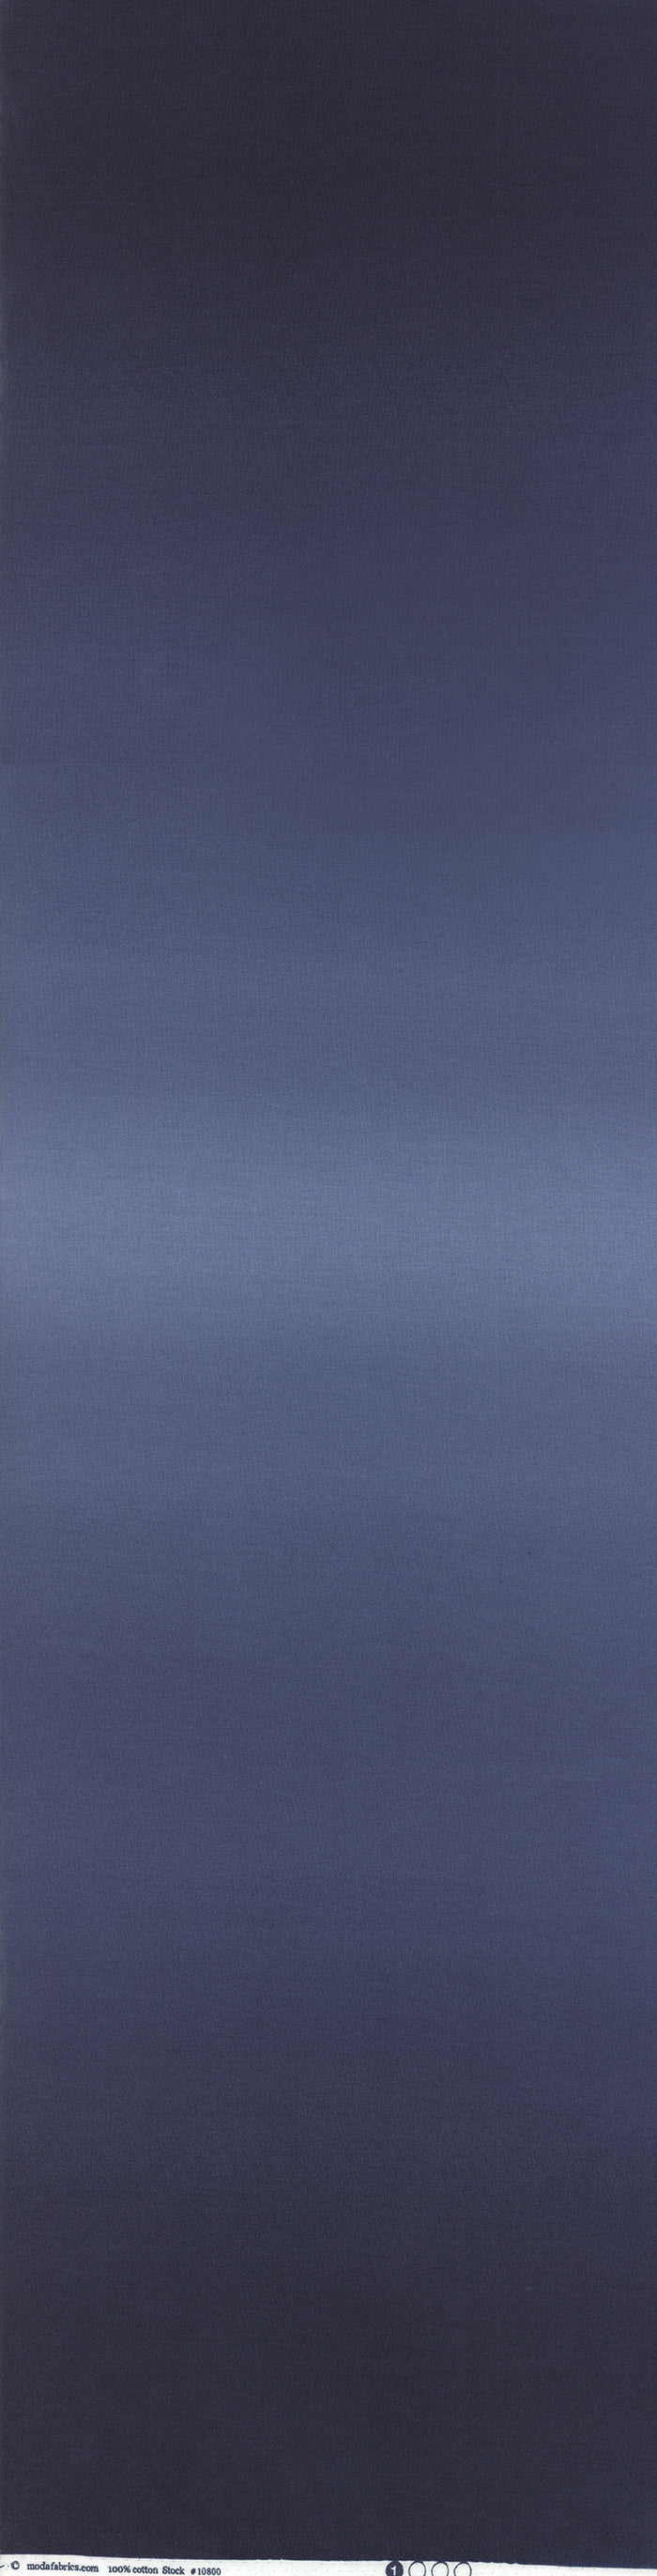 Ombre Basics Quilt Fabric - Indigo Blue - 10800 225